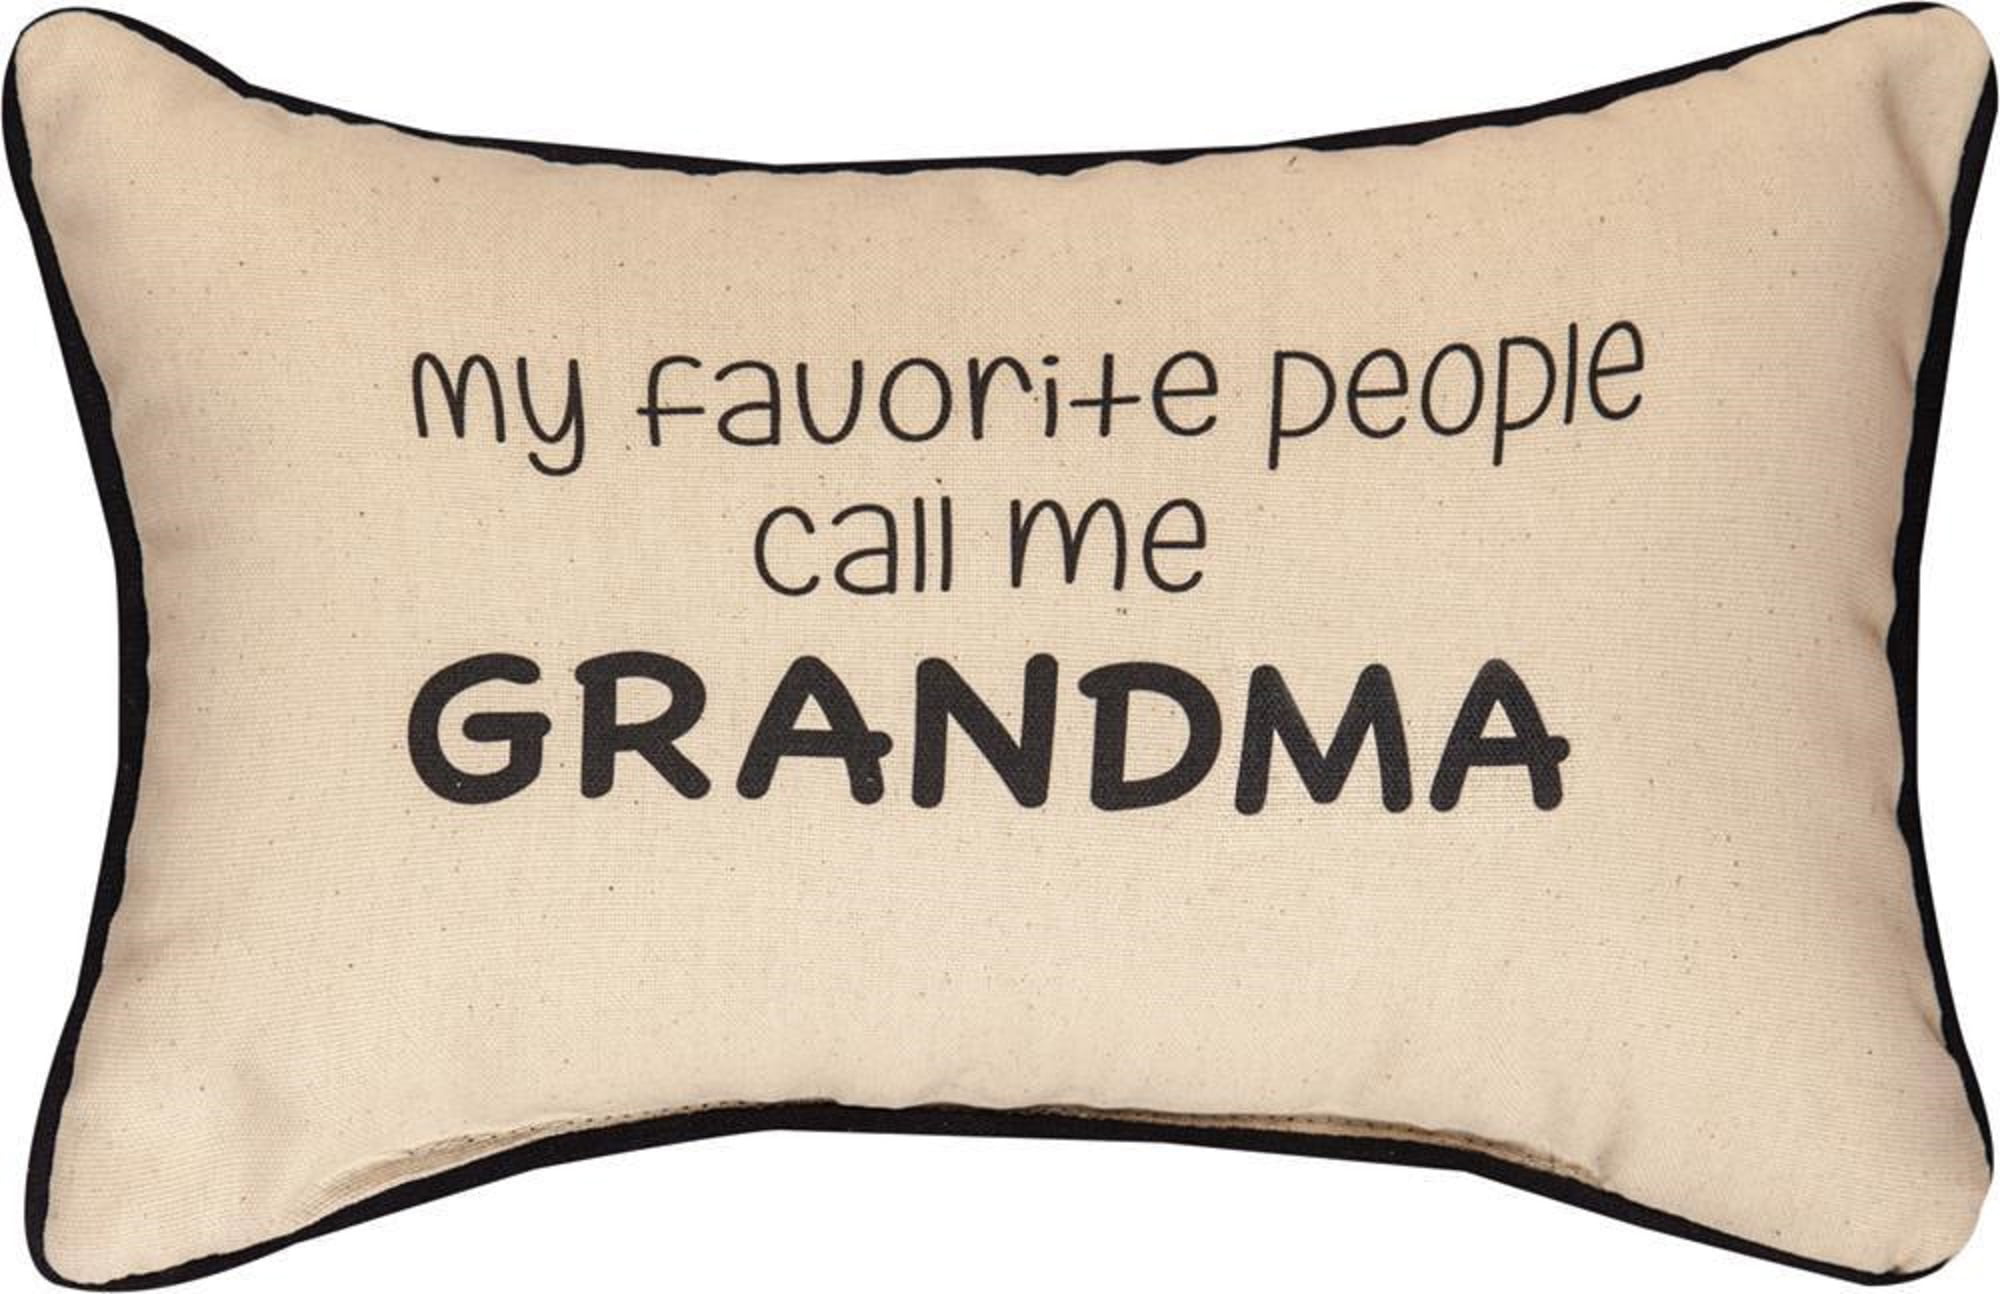 Funny Grandma Graphic & More My Favorite People Call Me Grandma Funny Grandparent Graphic Throw Pillow 16x16 Multicolor 